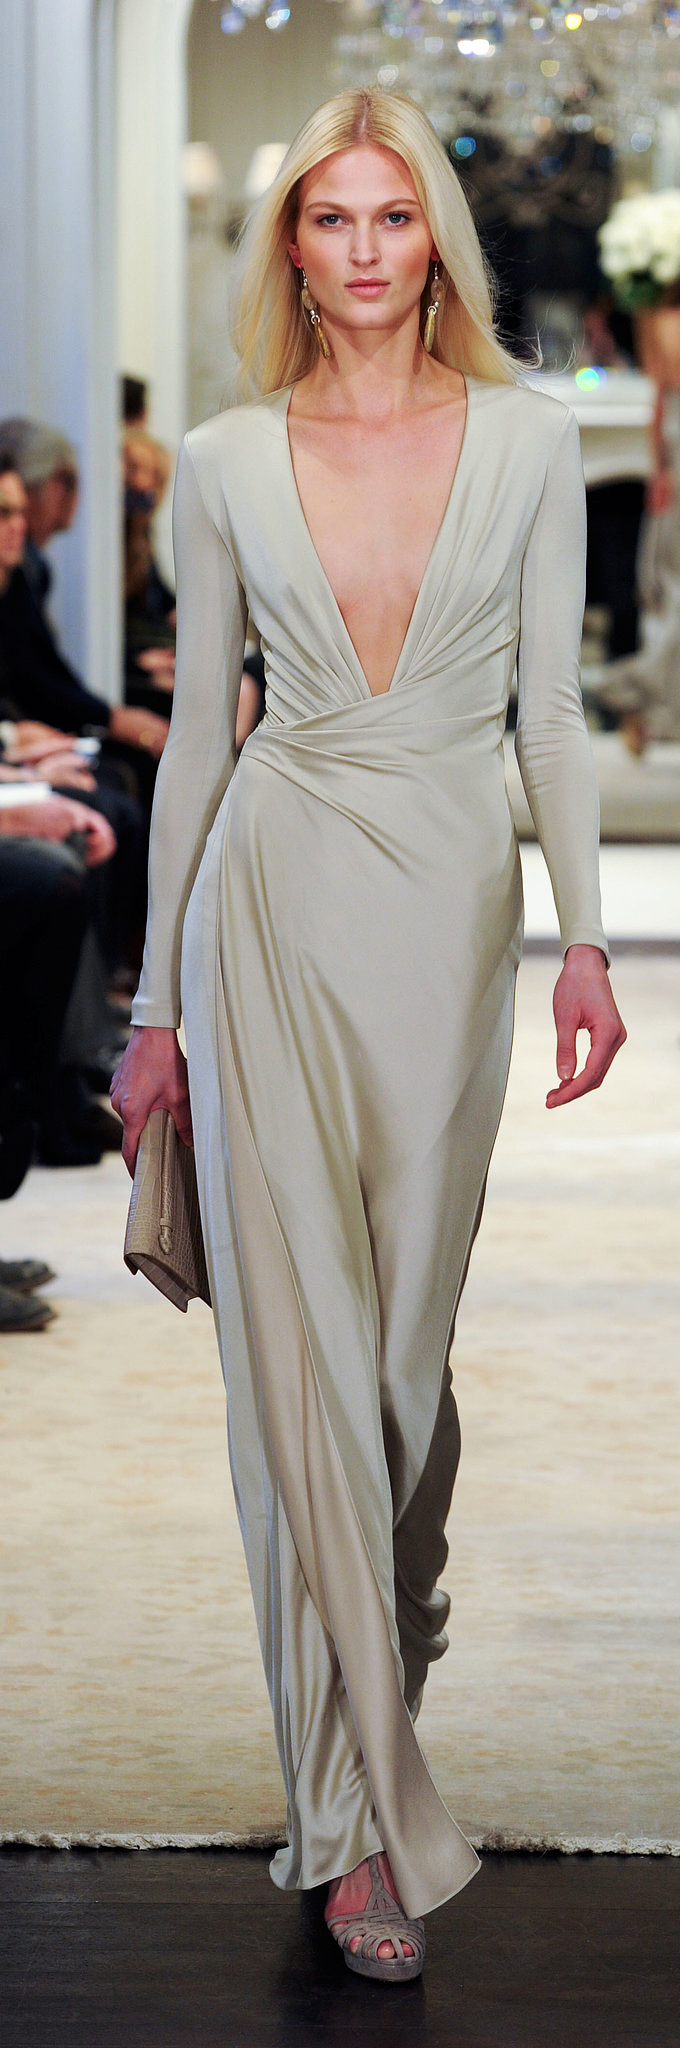 ralph lauren couture gowns